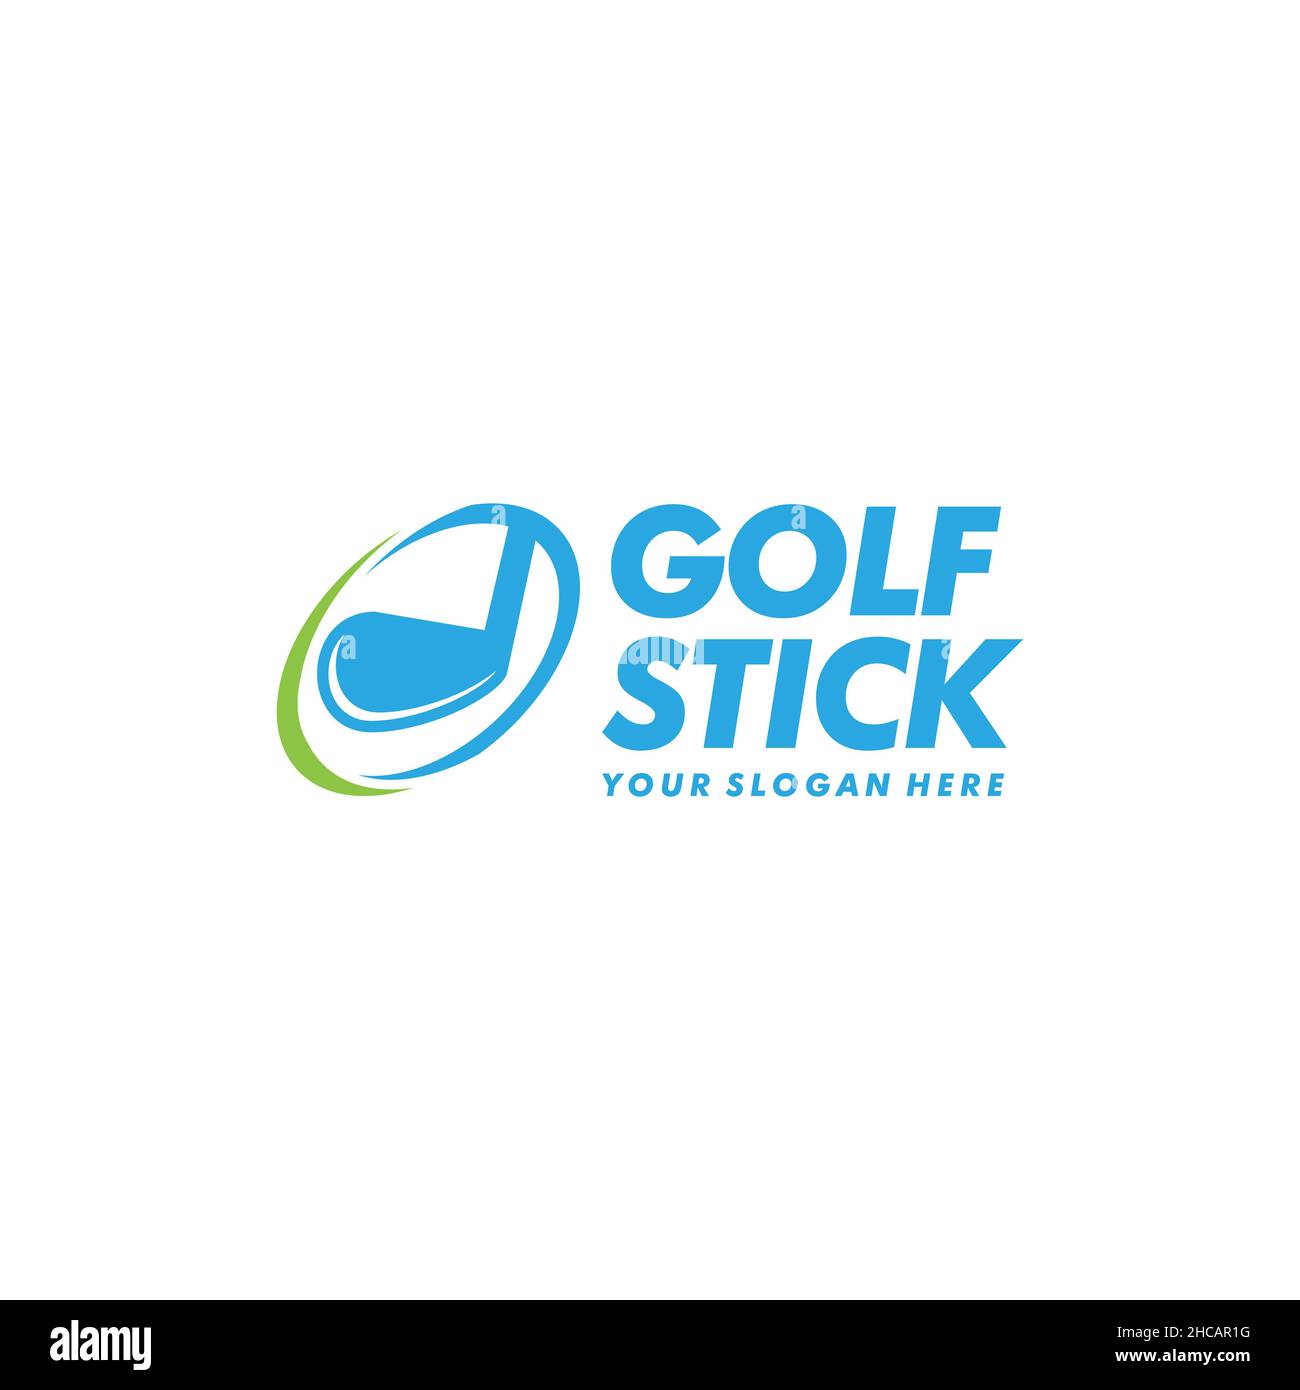 Minimalist Simple Colorful GOLF STICK logo design Stock Vector